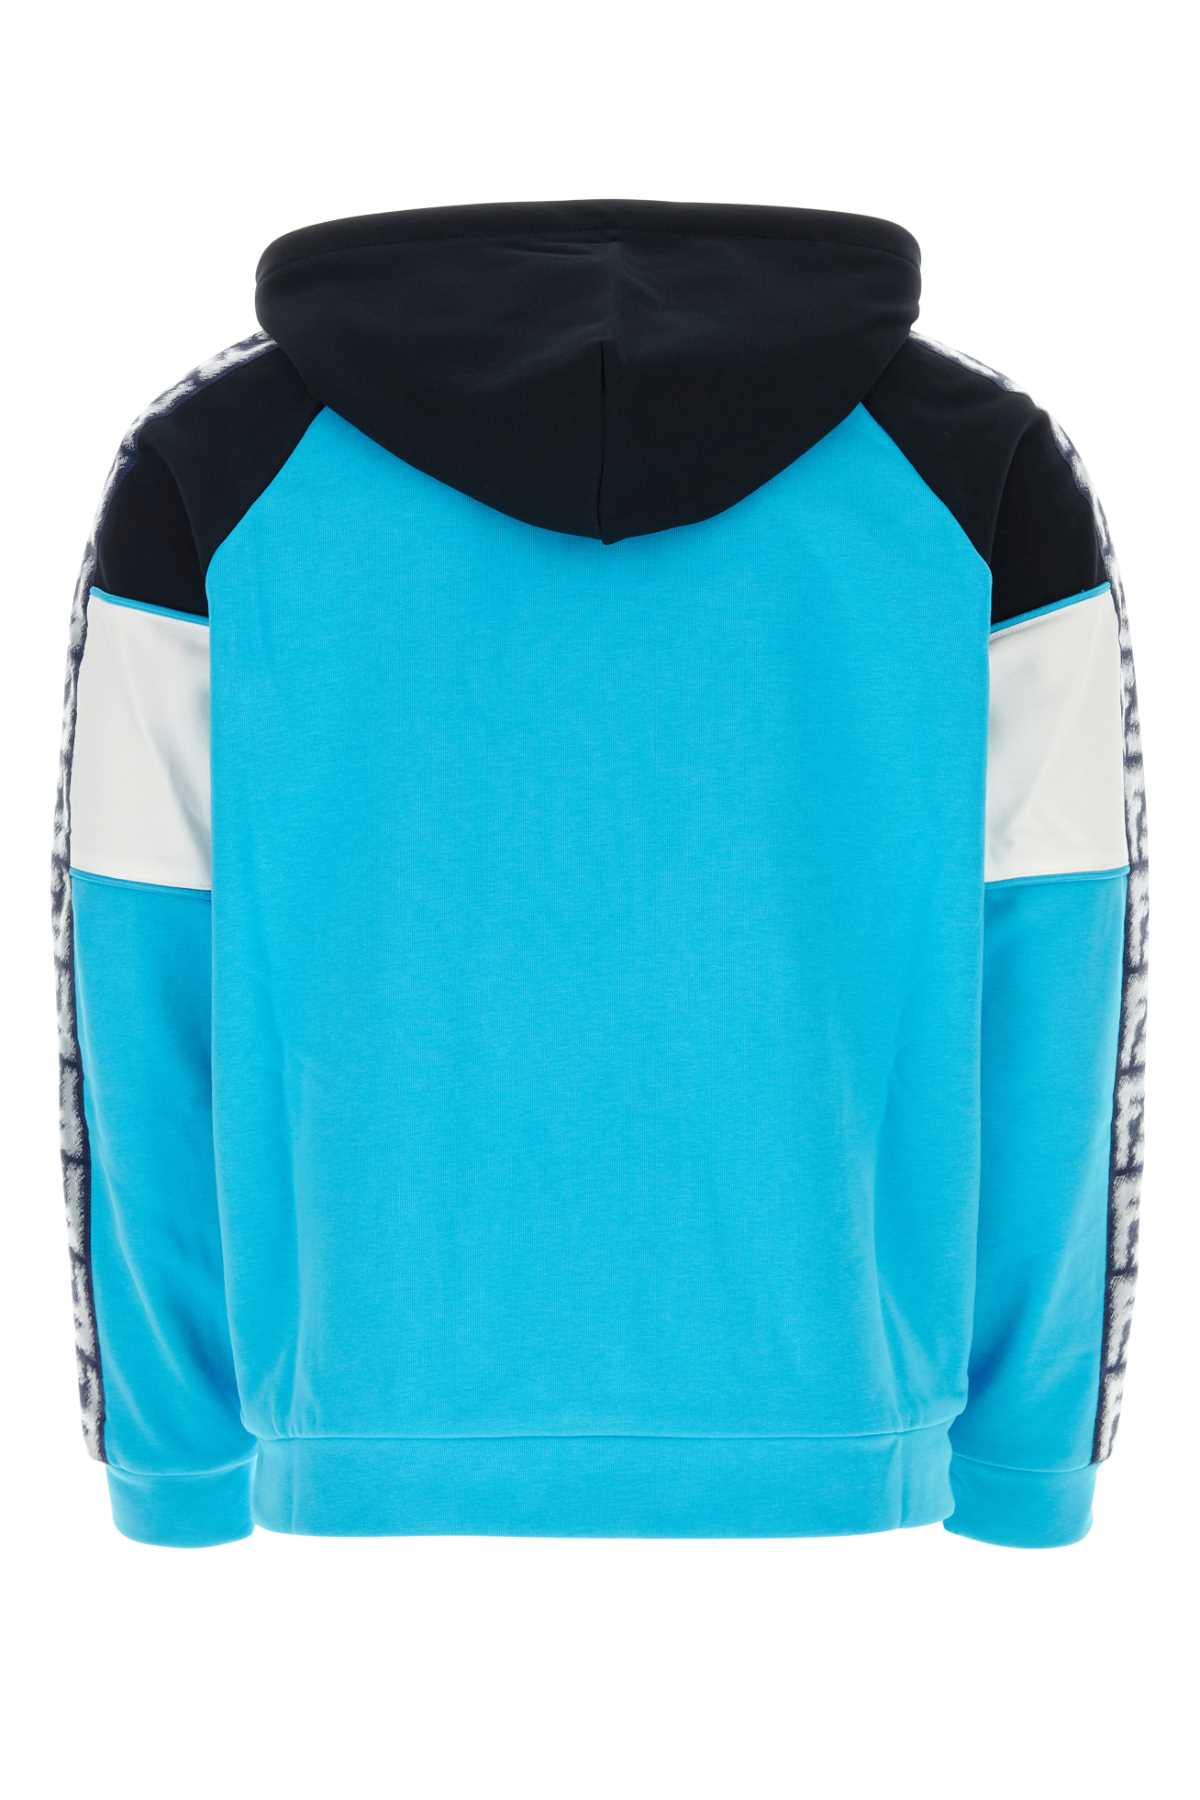 Fendi Multicolor Cotton Sweatshirt In F1krv